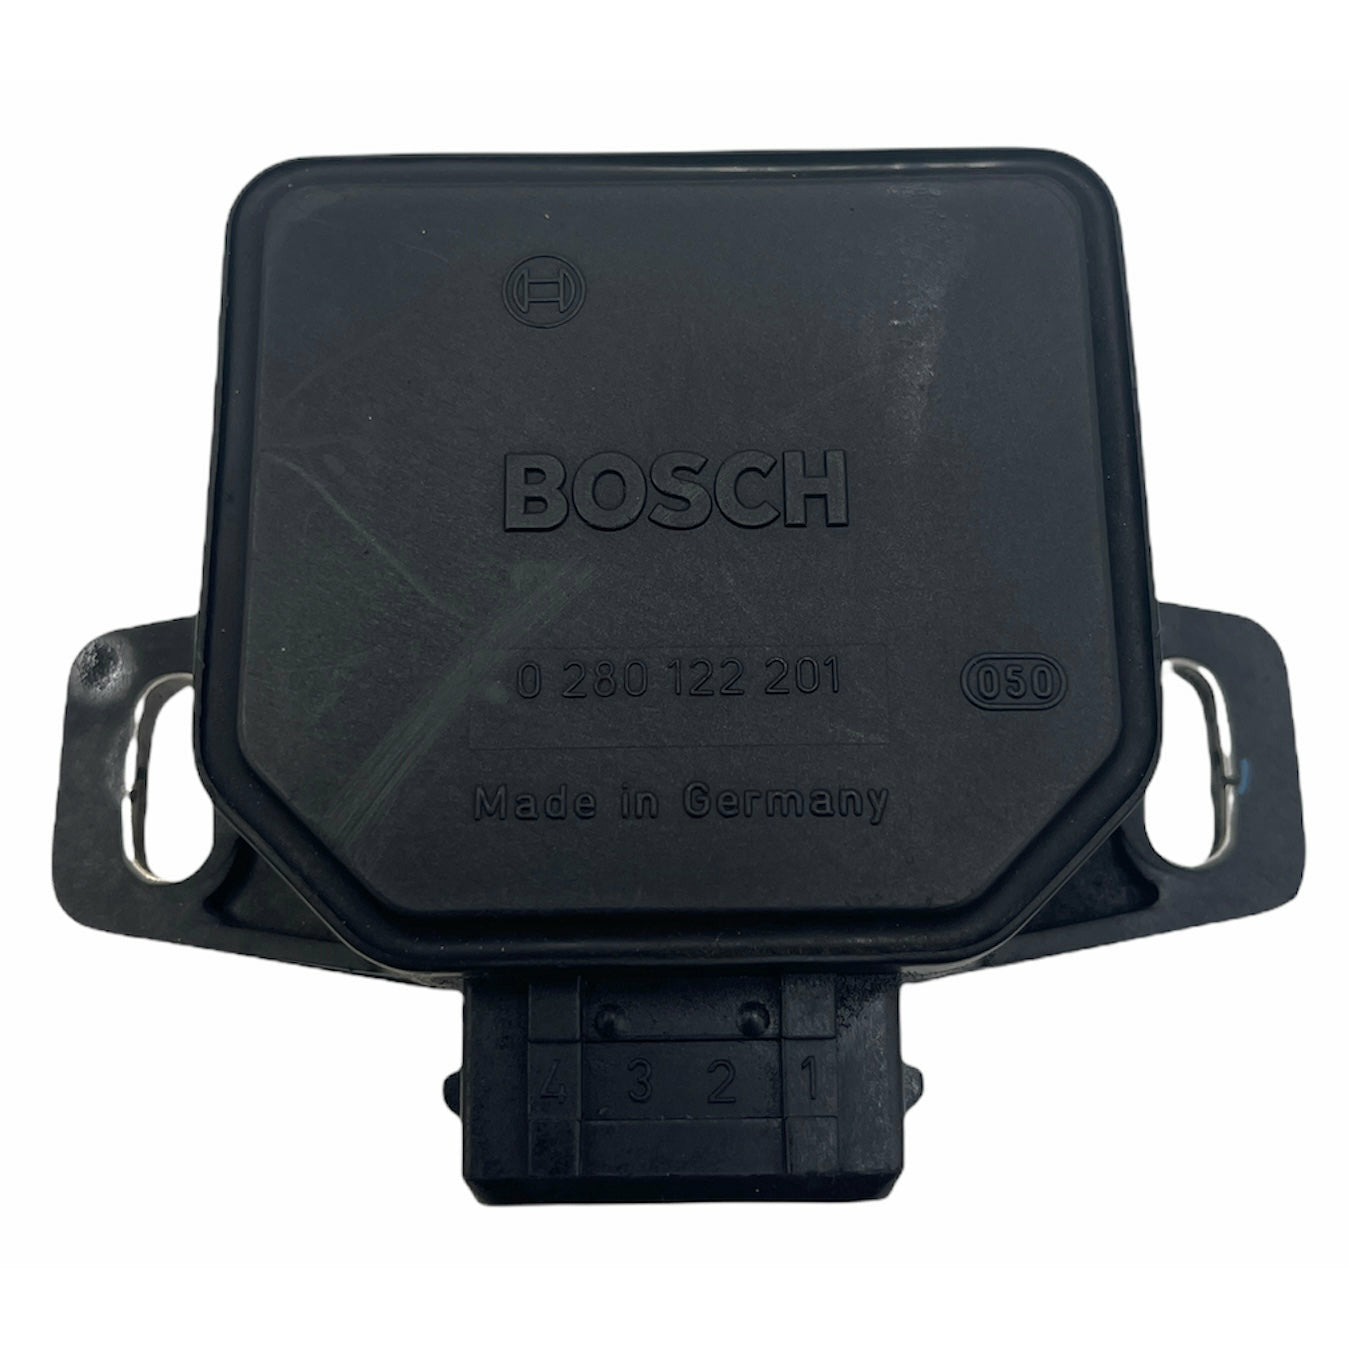 BOSCH throttle position sensor 0280122201 / 13631461852